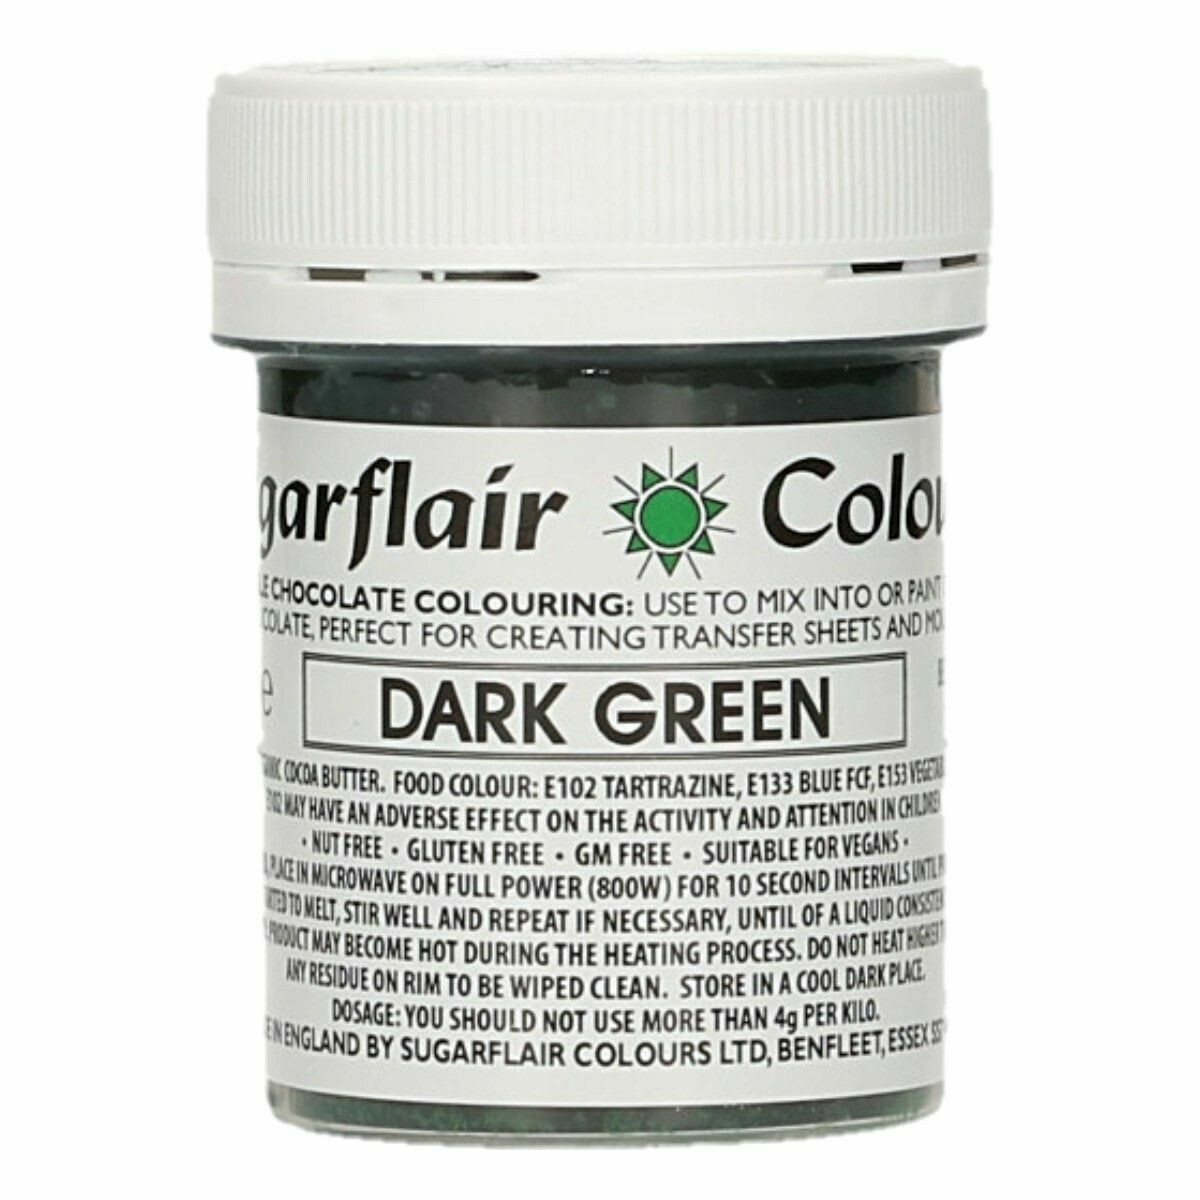 Sugarflair Chocolate Colour -DARK GREEN 35g - Χρώμα σοκολάτας -Σκούρο πράσινο